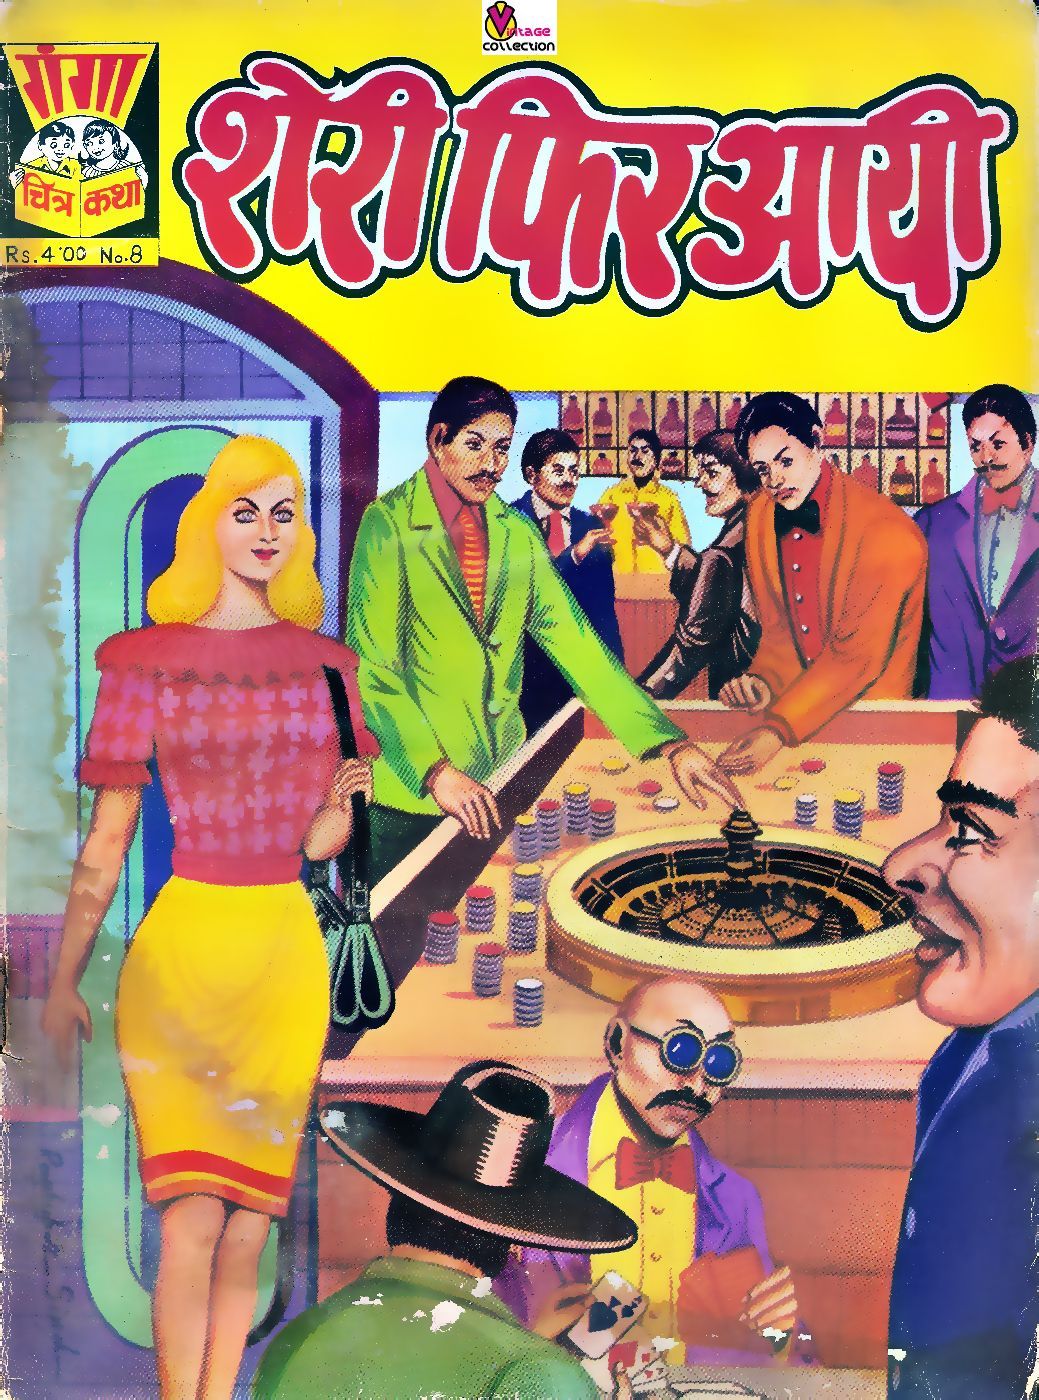 Savita bhabhi porn comics PDF Hindi download free